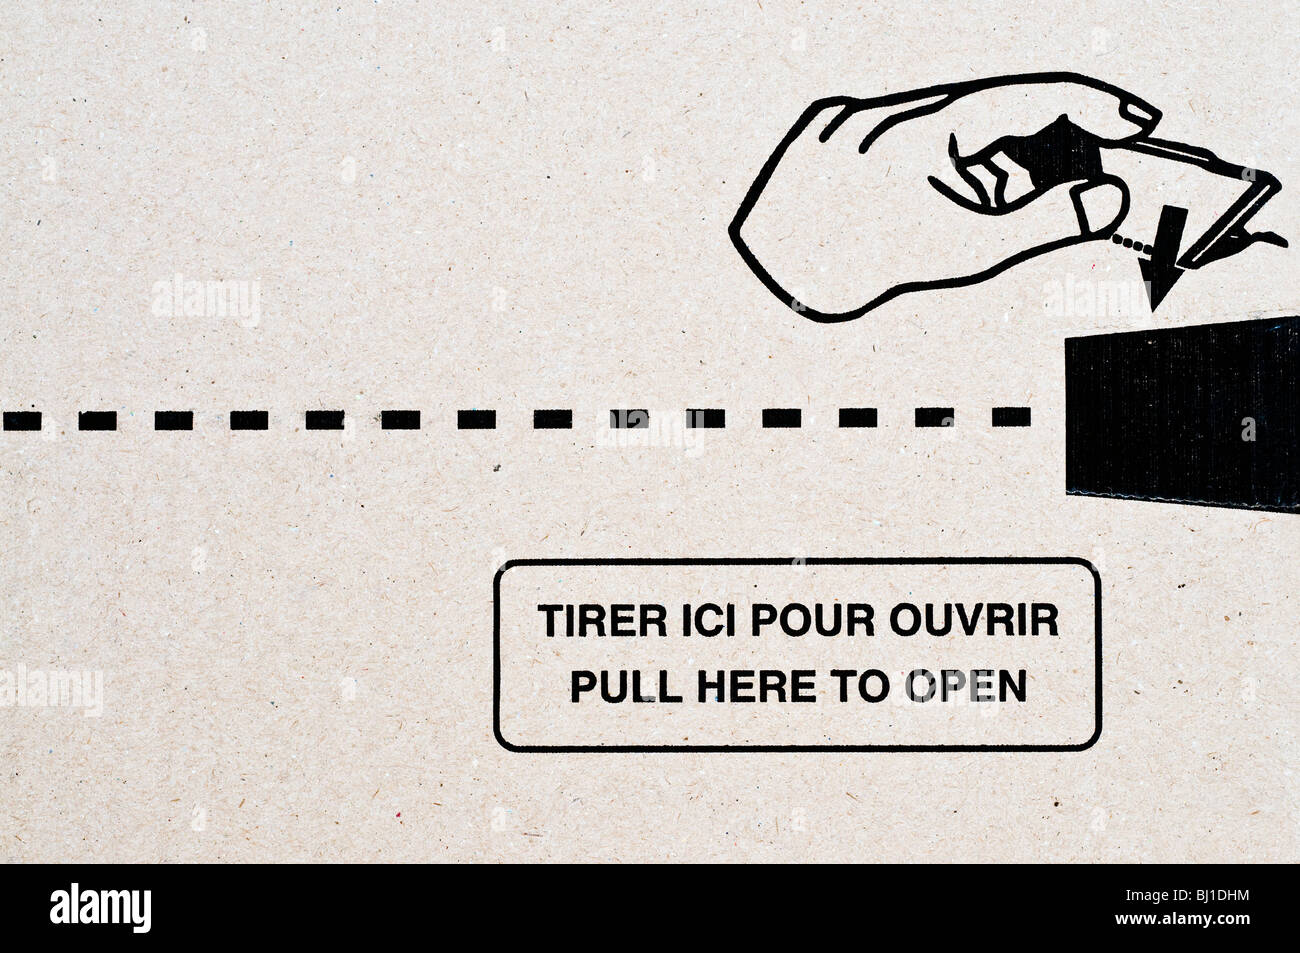 French / English language cardboard box opening information. Stock Photo